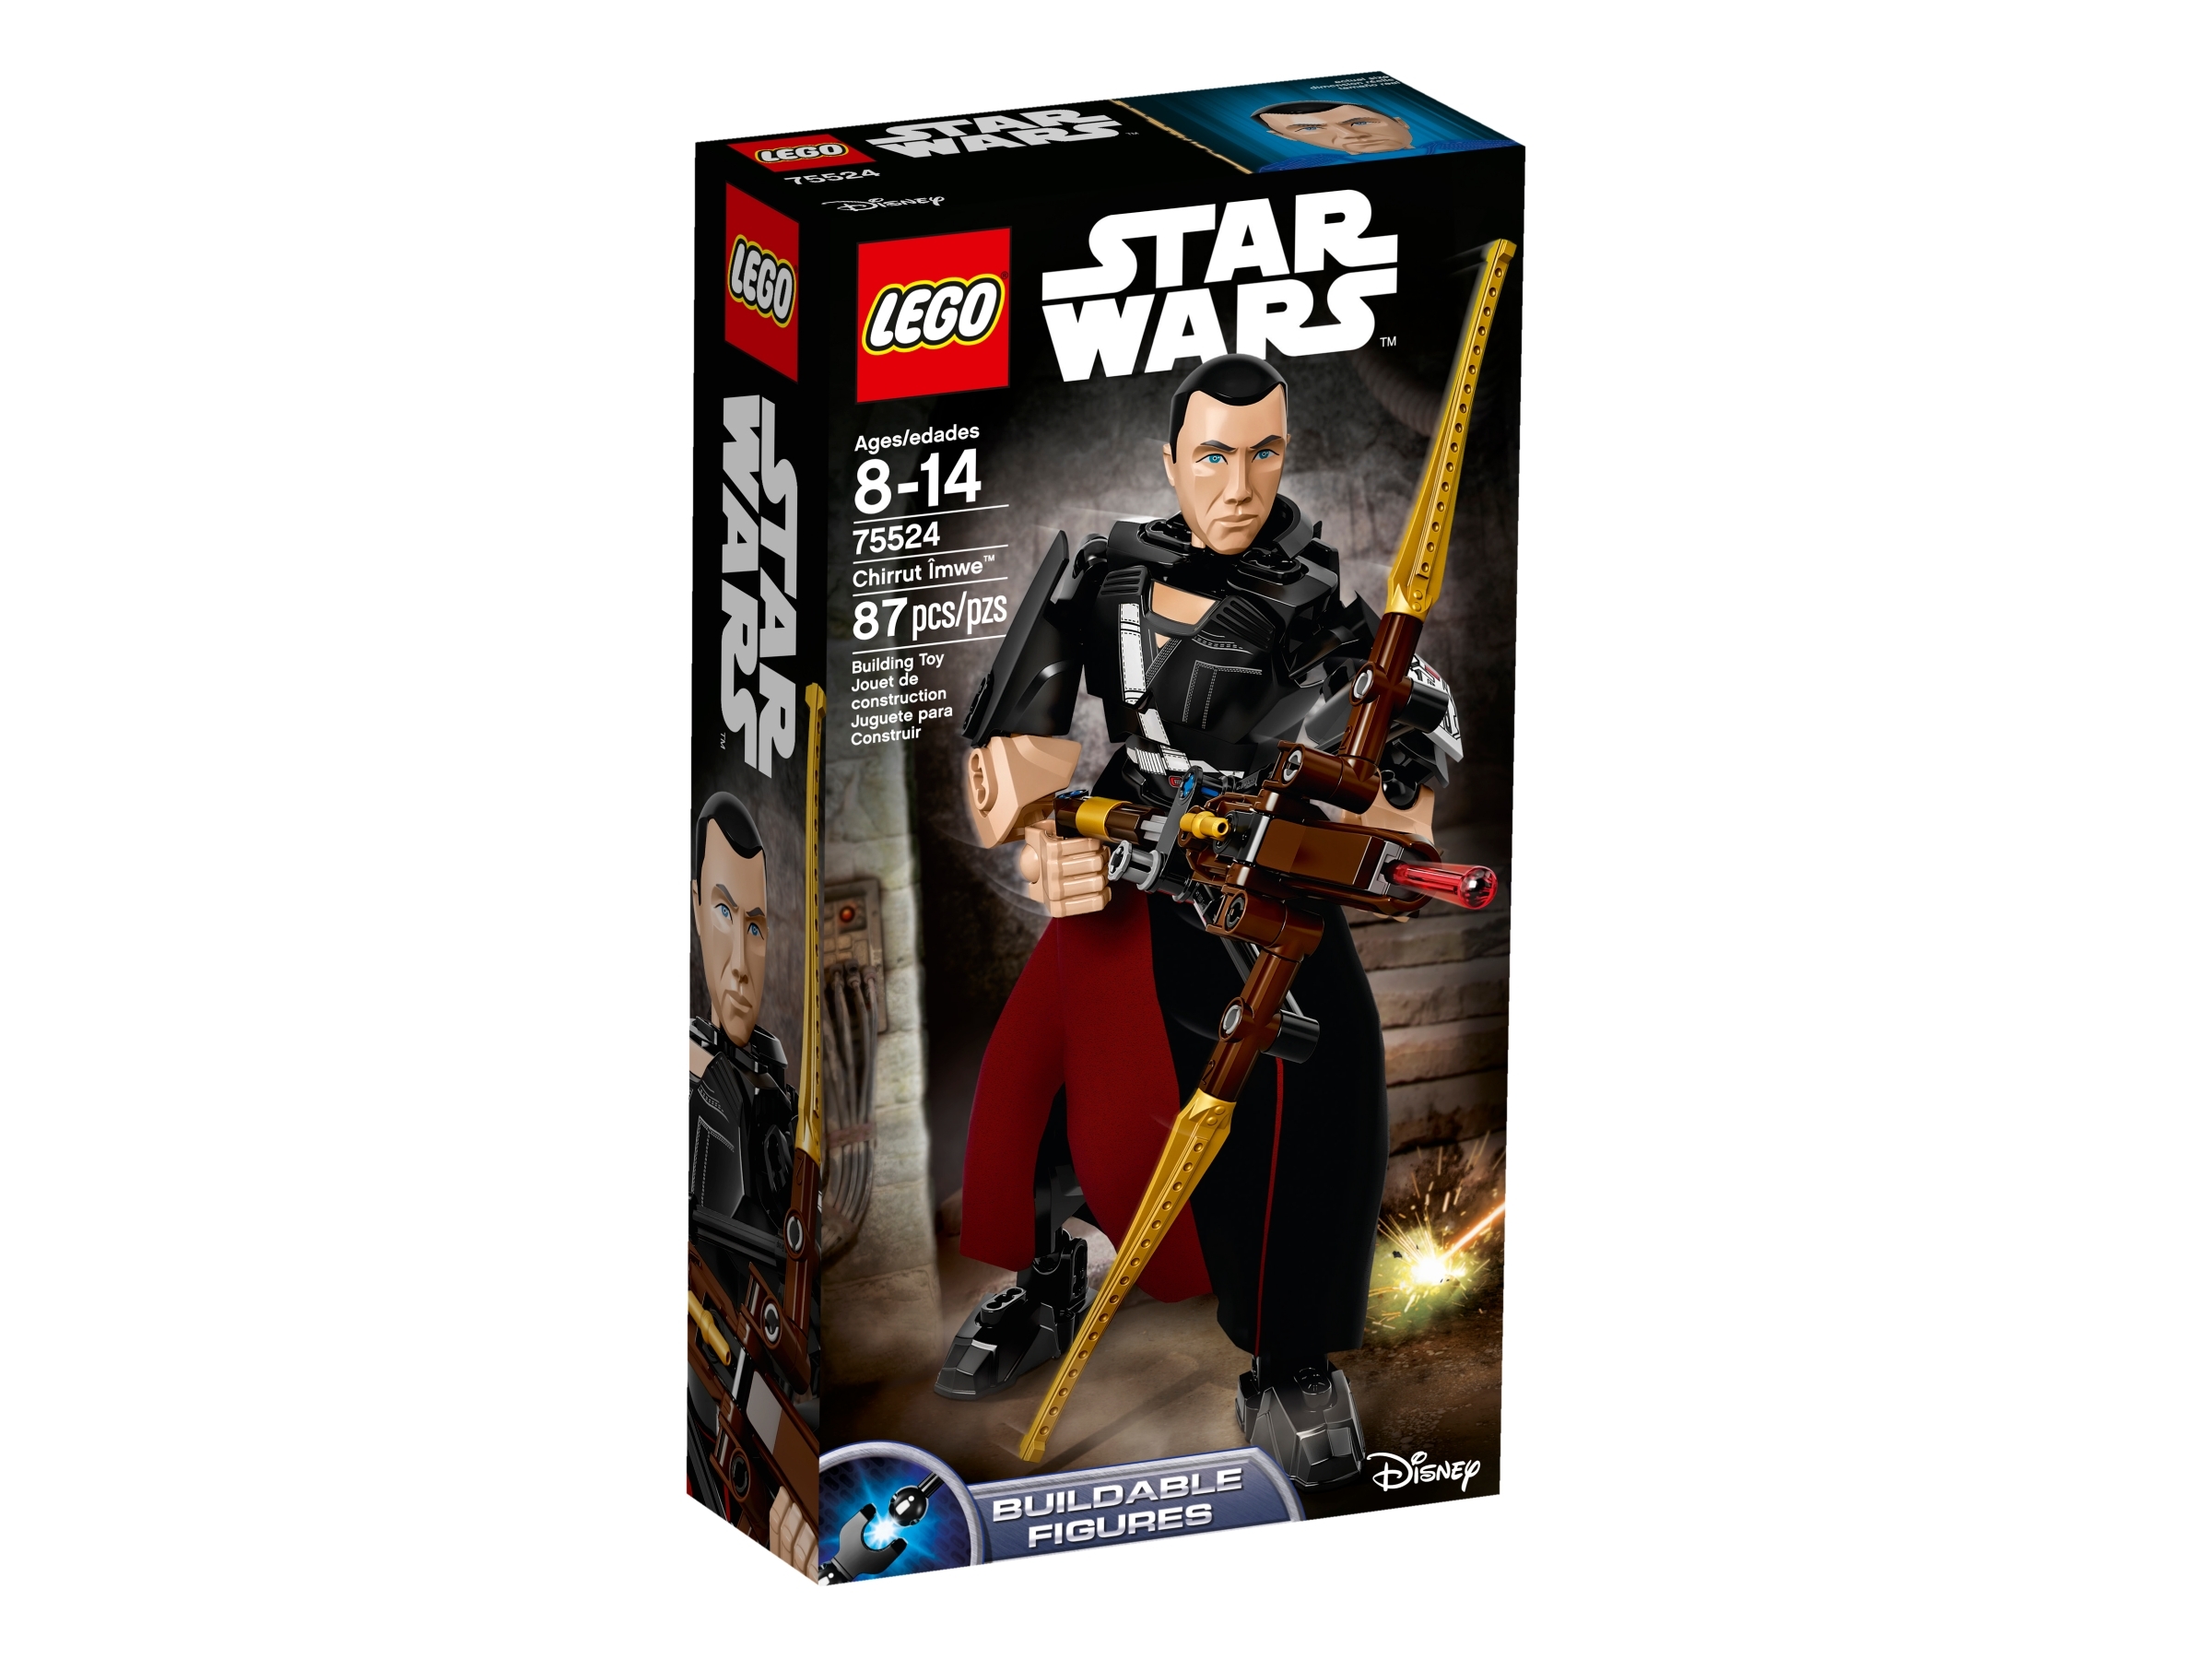 LEGO Star Wars Chirrut Îmwe 2017 75524 for sale online